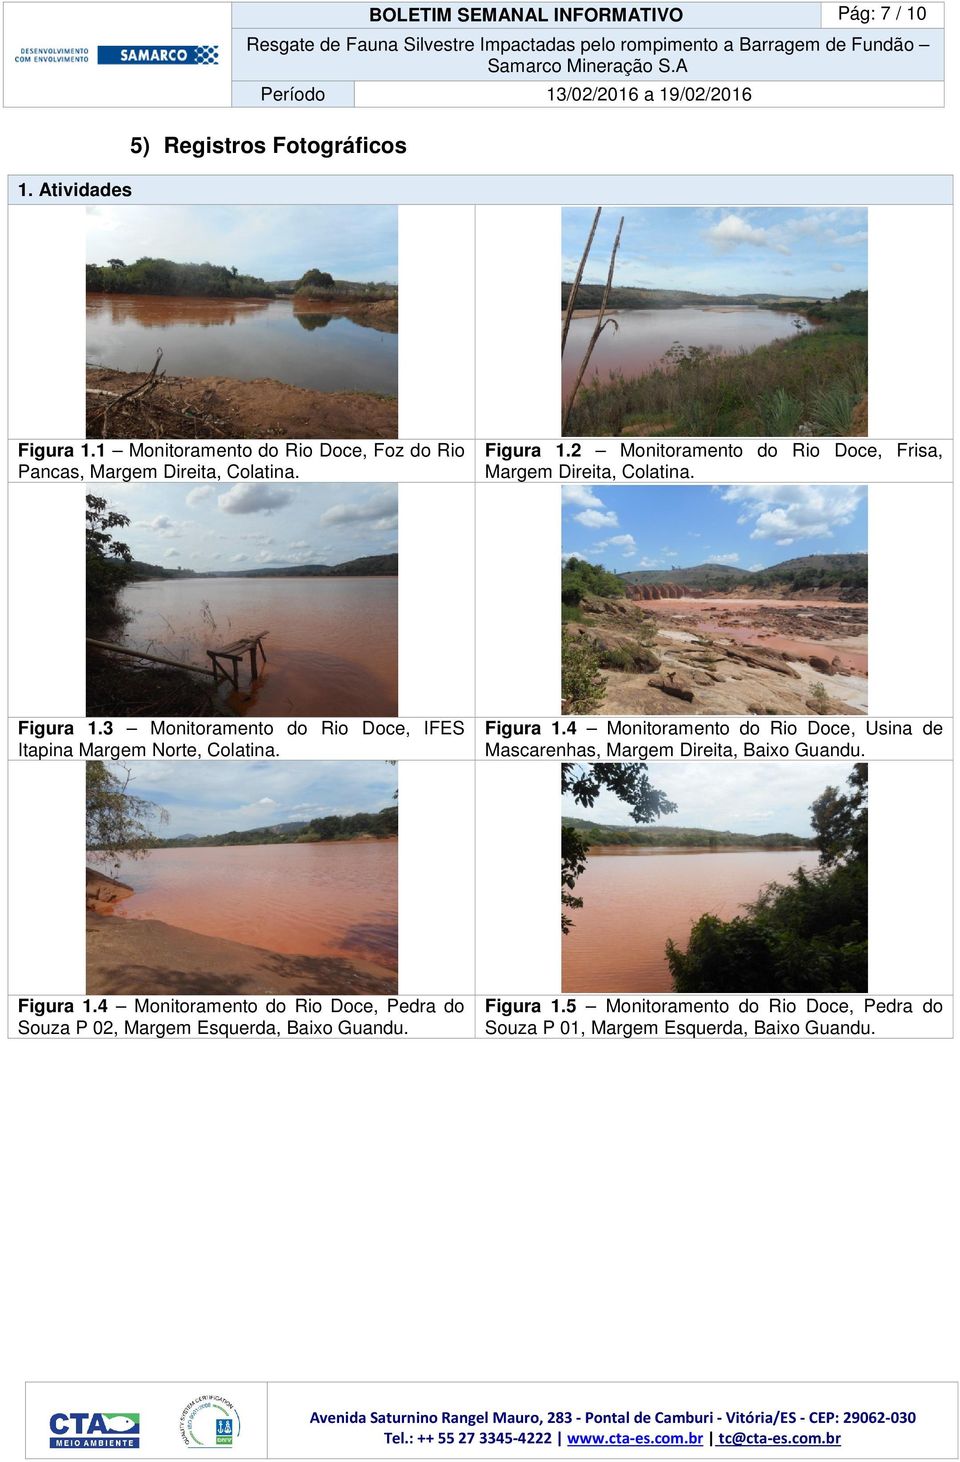 Figura 1.3 Monitoramento do Rio Doce, IFES Itapina Margem Norte, Colatina. Figura 1.